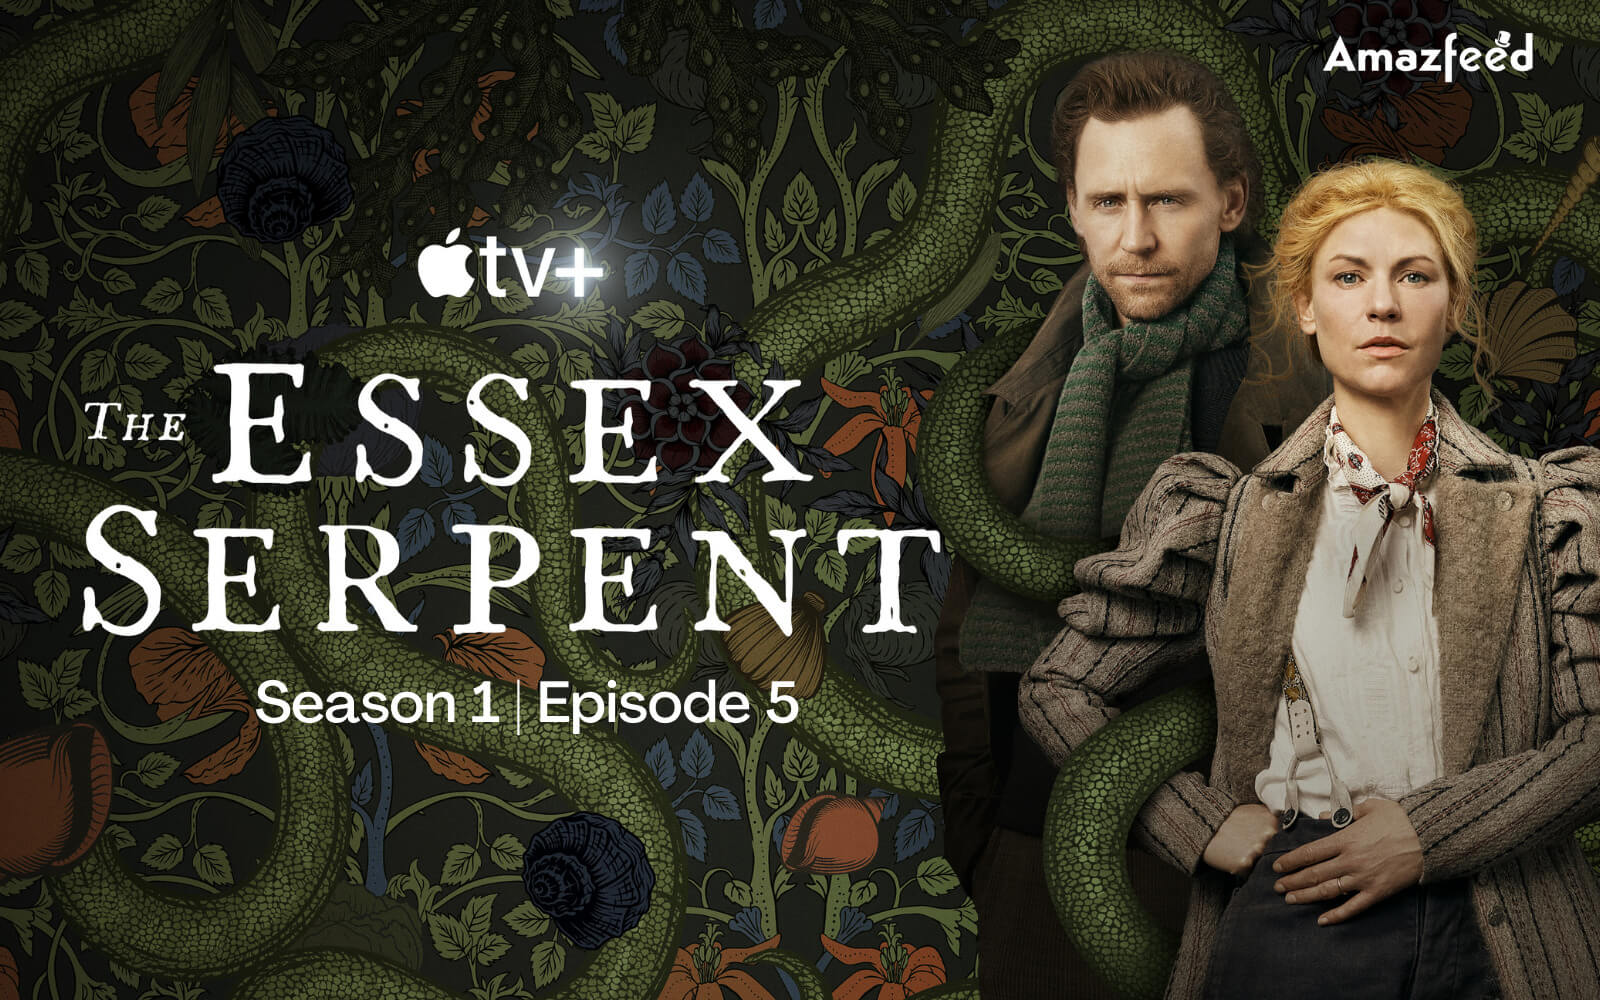 he Essex serpent Season 1 Episode 5 Release date